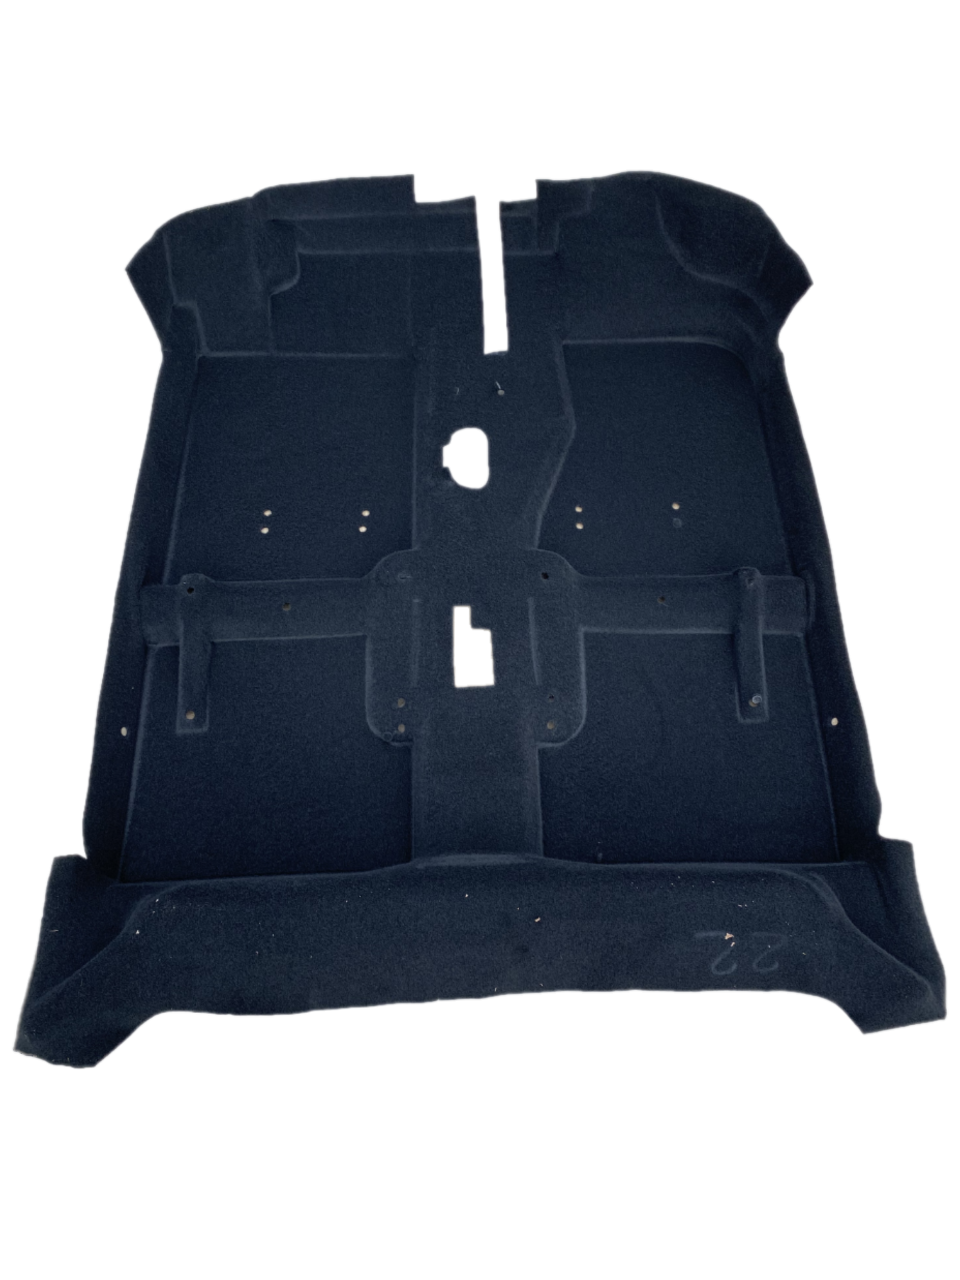 Ковролин (ковер) пола для автомобиля ВАЗ 211021112112217021712172/ Обшивка салона пола